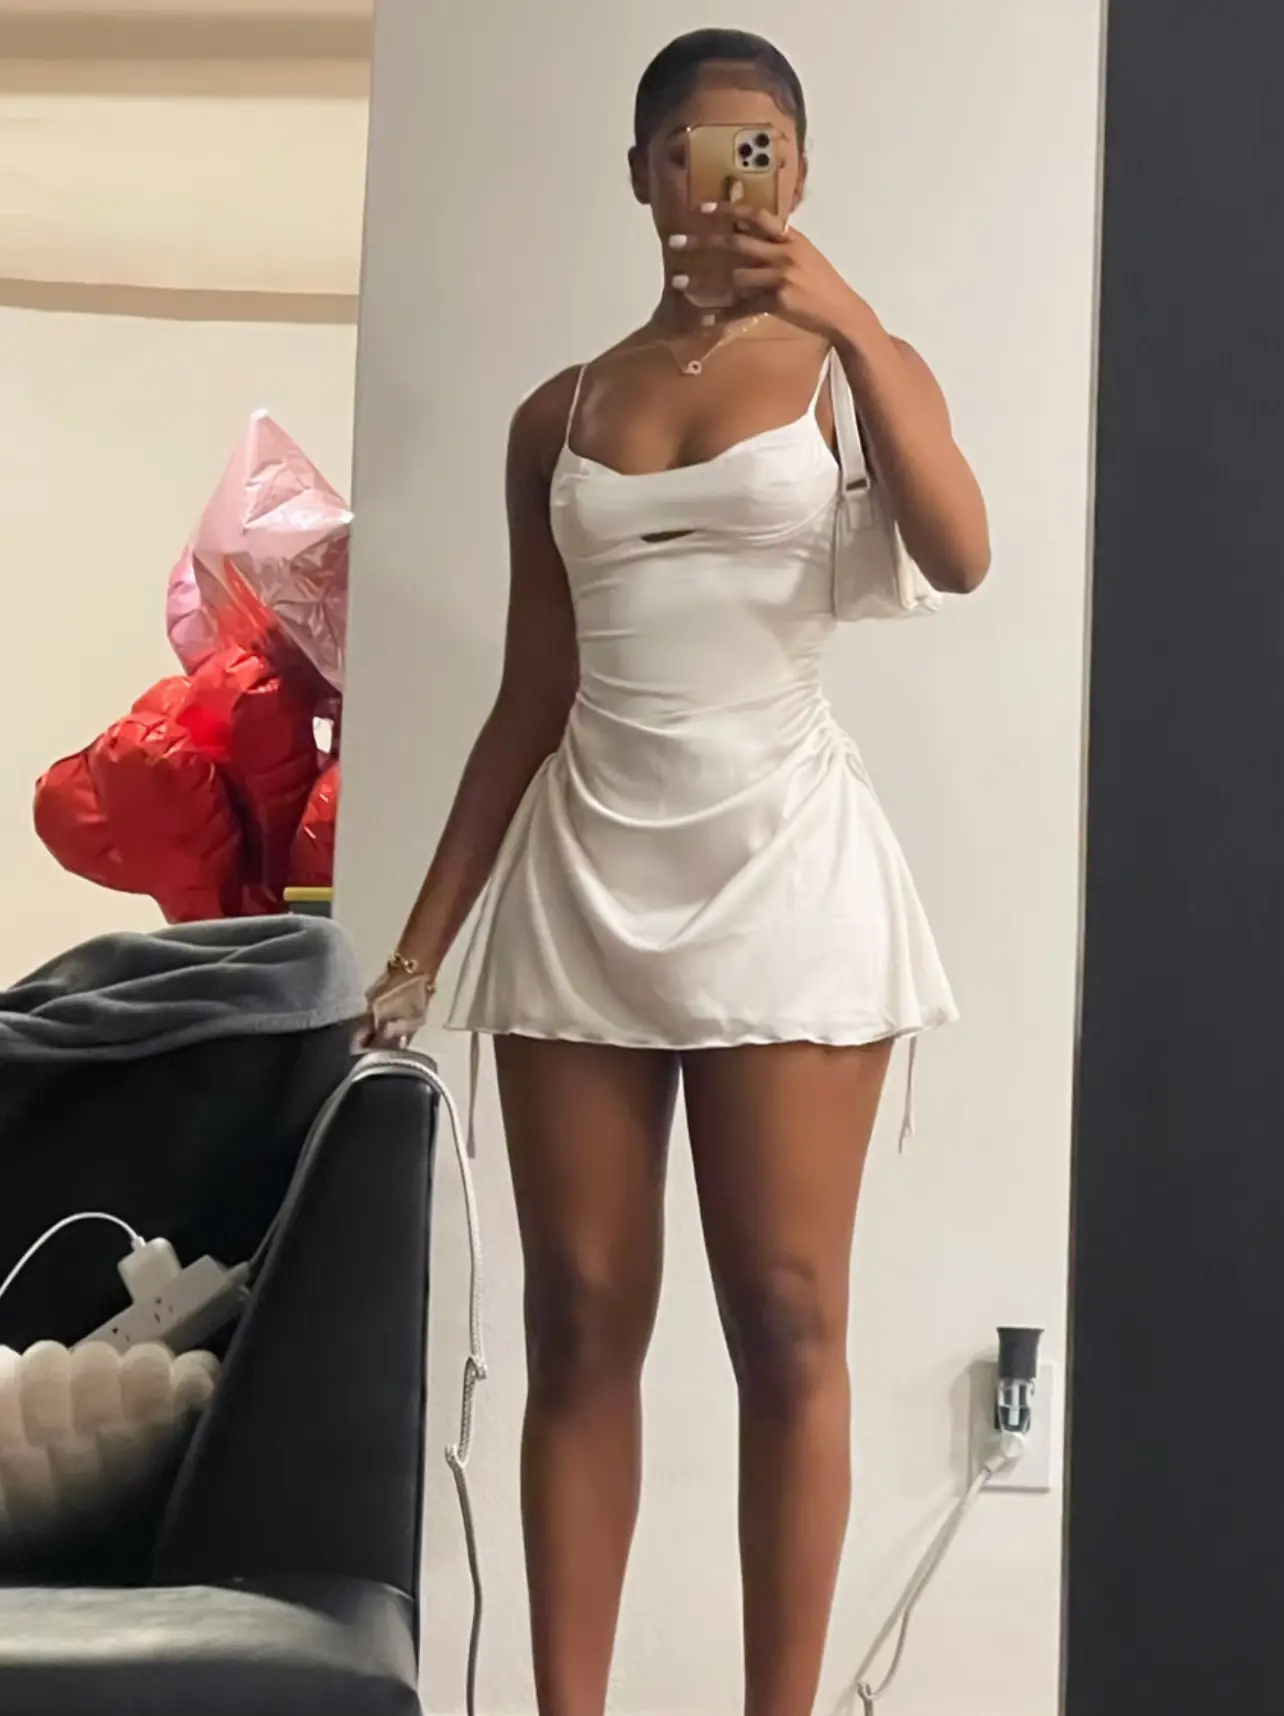 Kelly  Midsize Fashion on Instagram: Trying another viral  shapewear  dress on my midsize, size 12/14 body! Wearing a size XXL. Okayyy I know  I've already shared two other shapewear dresses